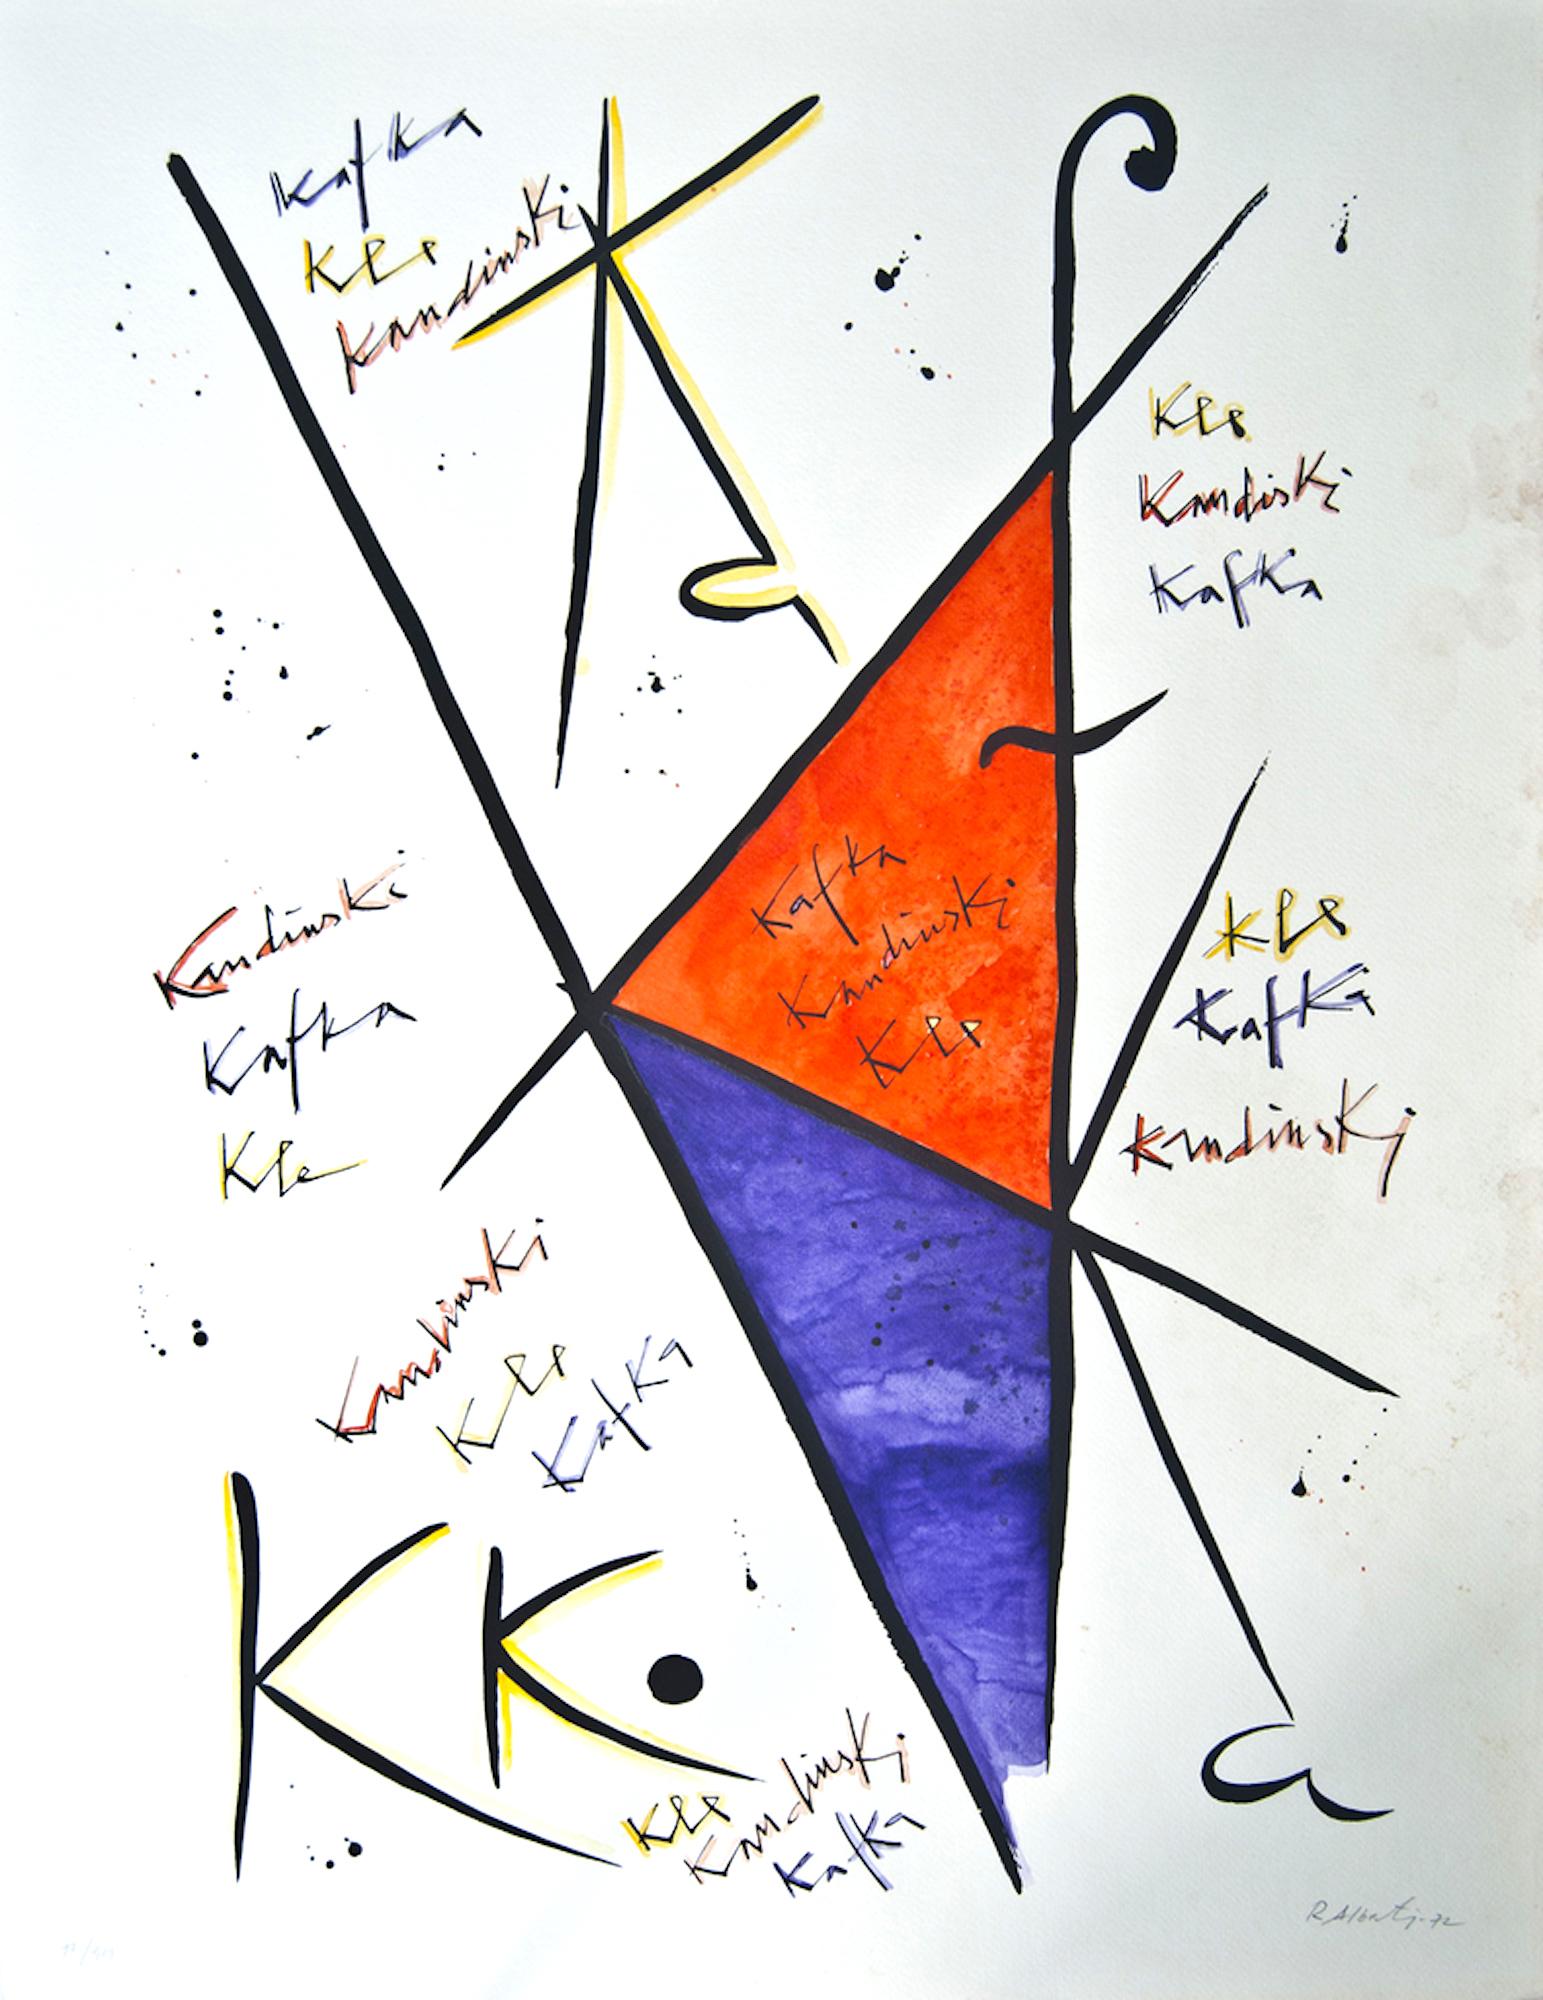 Rafael Alberti Figurative Print - Letter K - Lithograph by Raphael Alberti - 1972